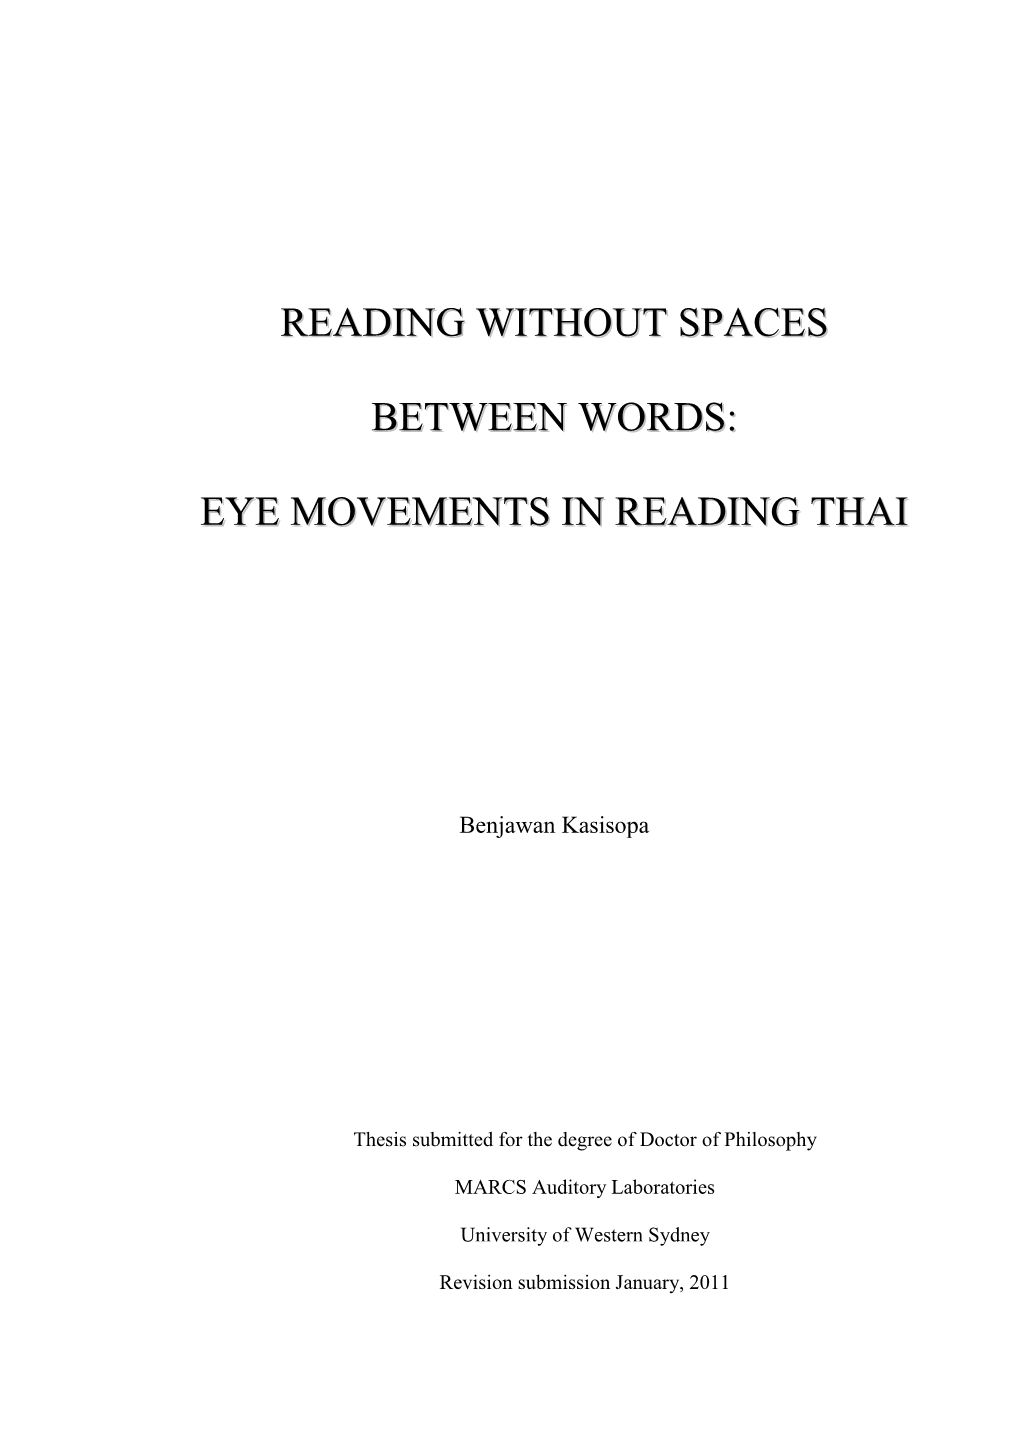 Eye Movements in Reading Thai